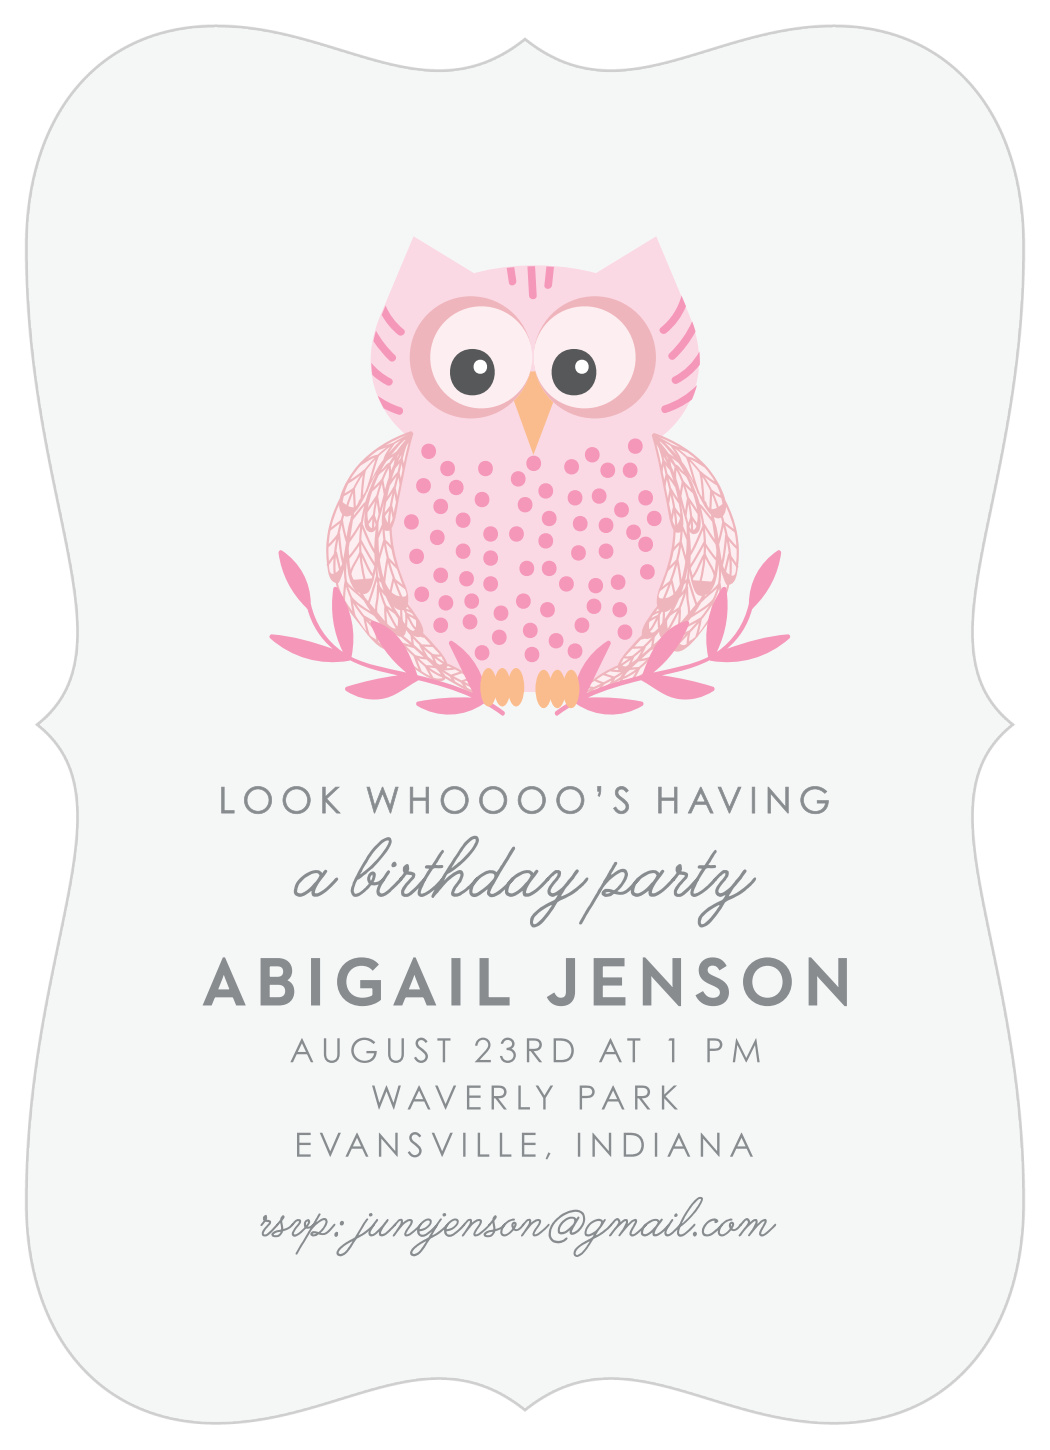 Little Owl Children's Birthday Invitations